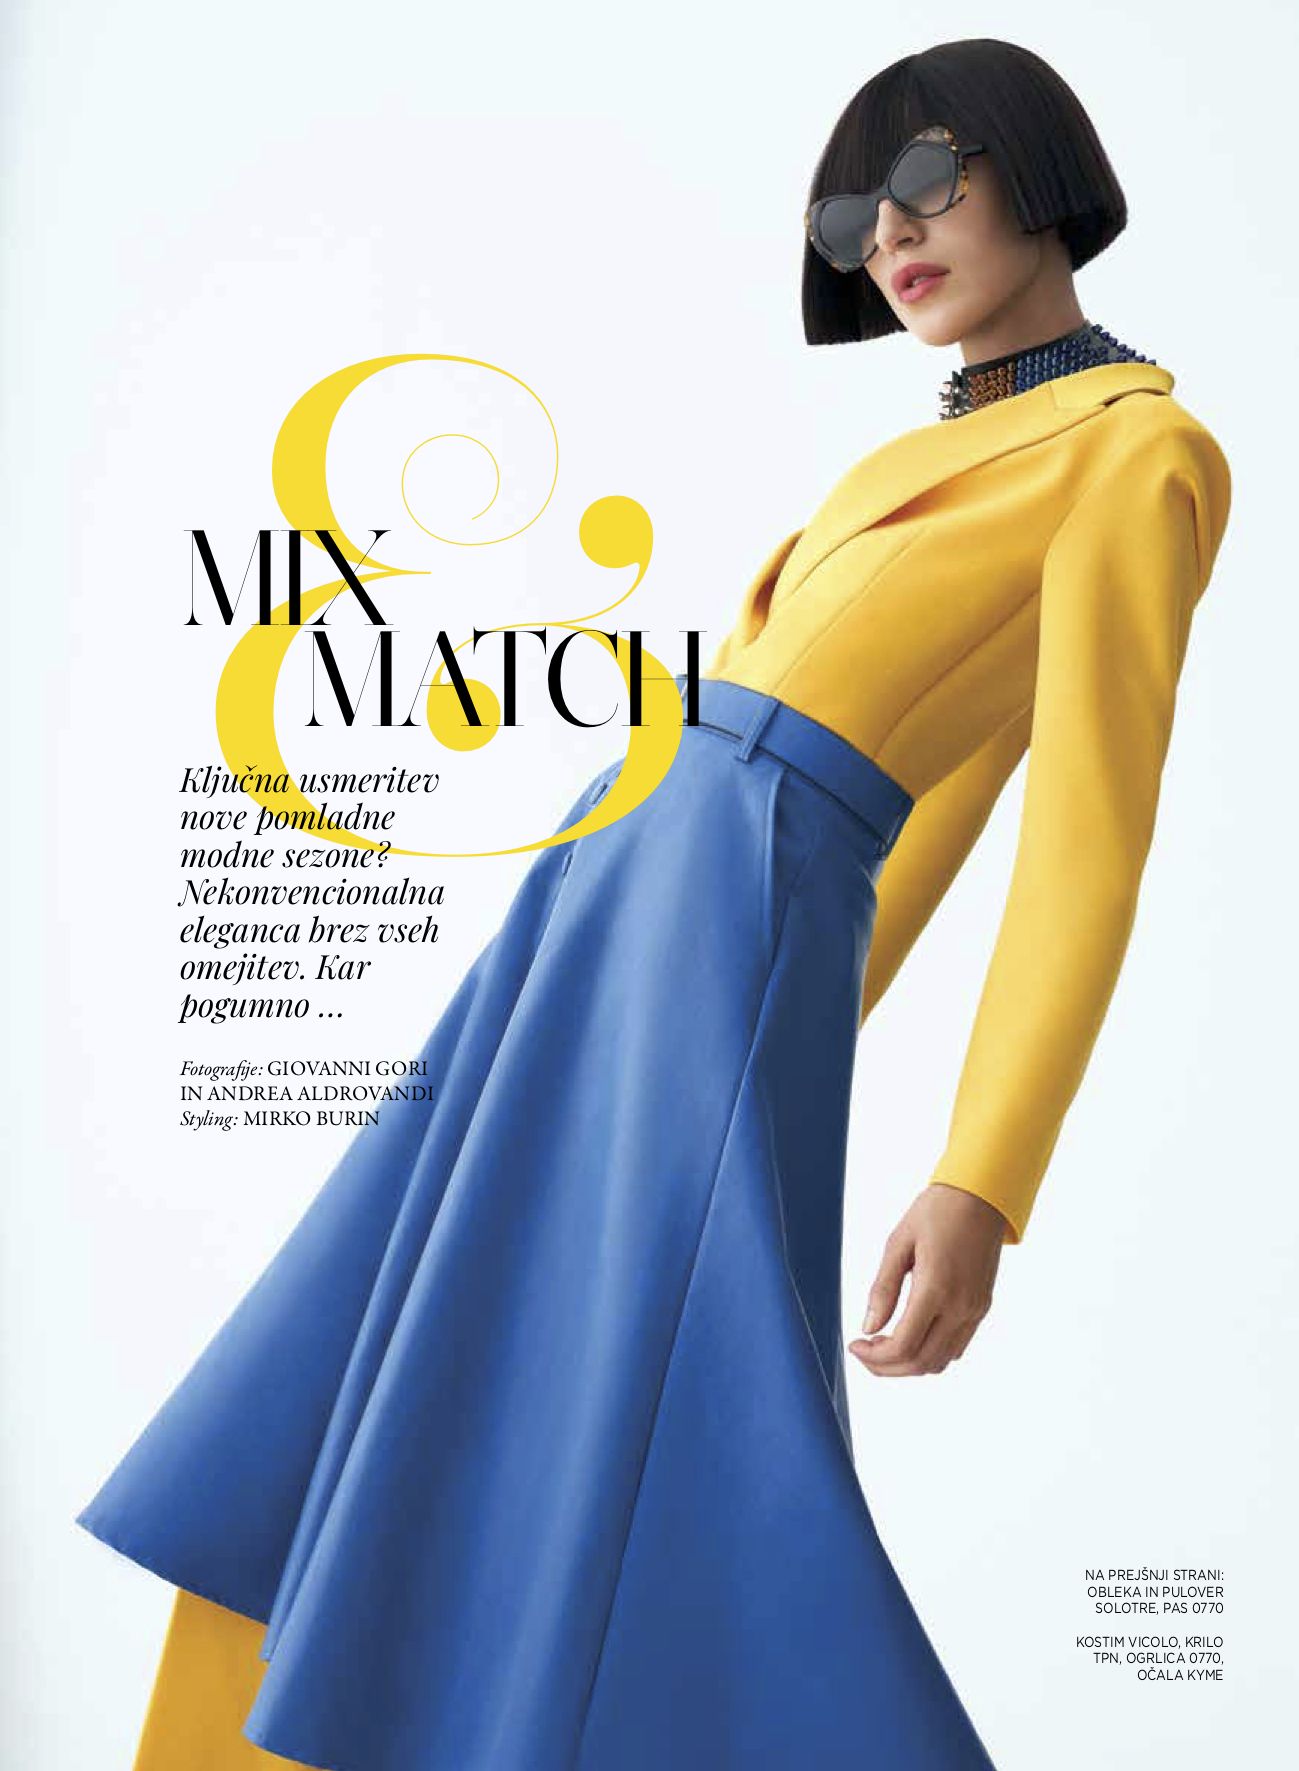 Gloss Magazine Cover - Pic. 2